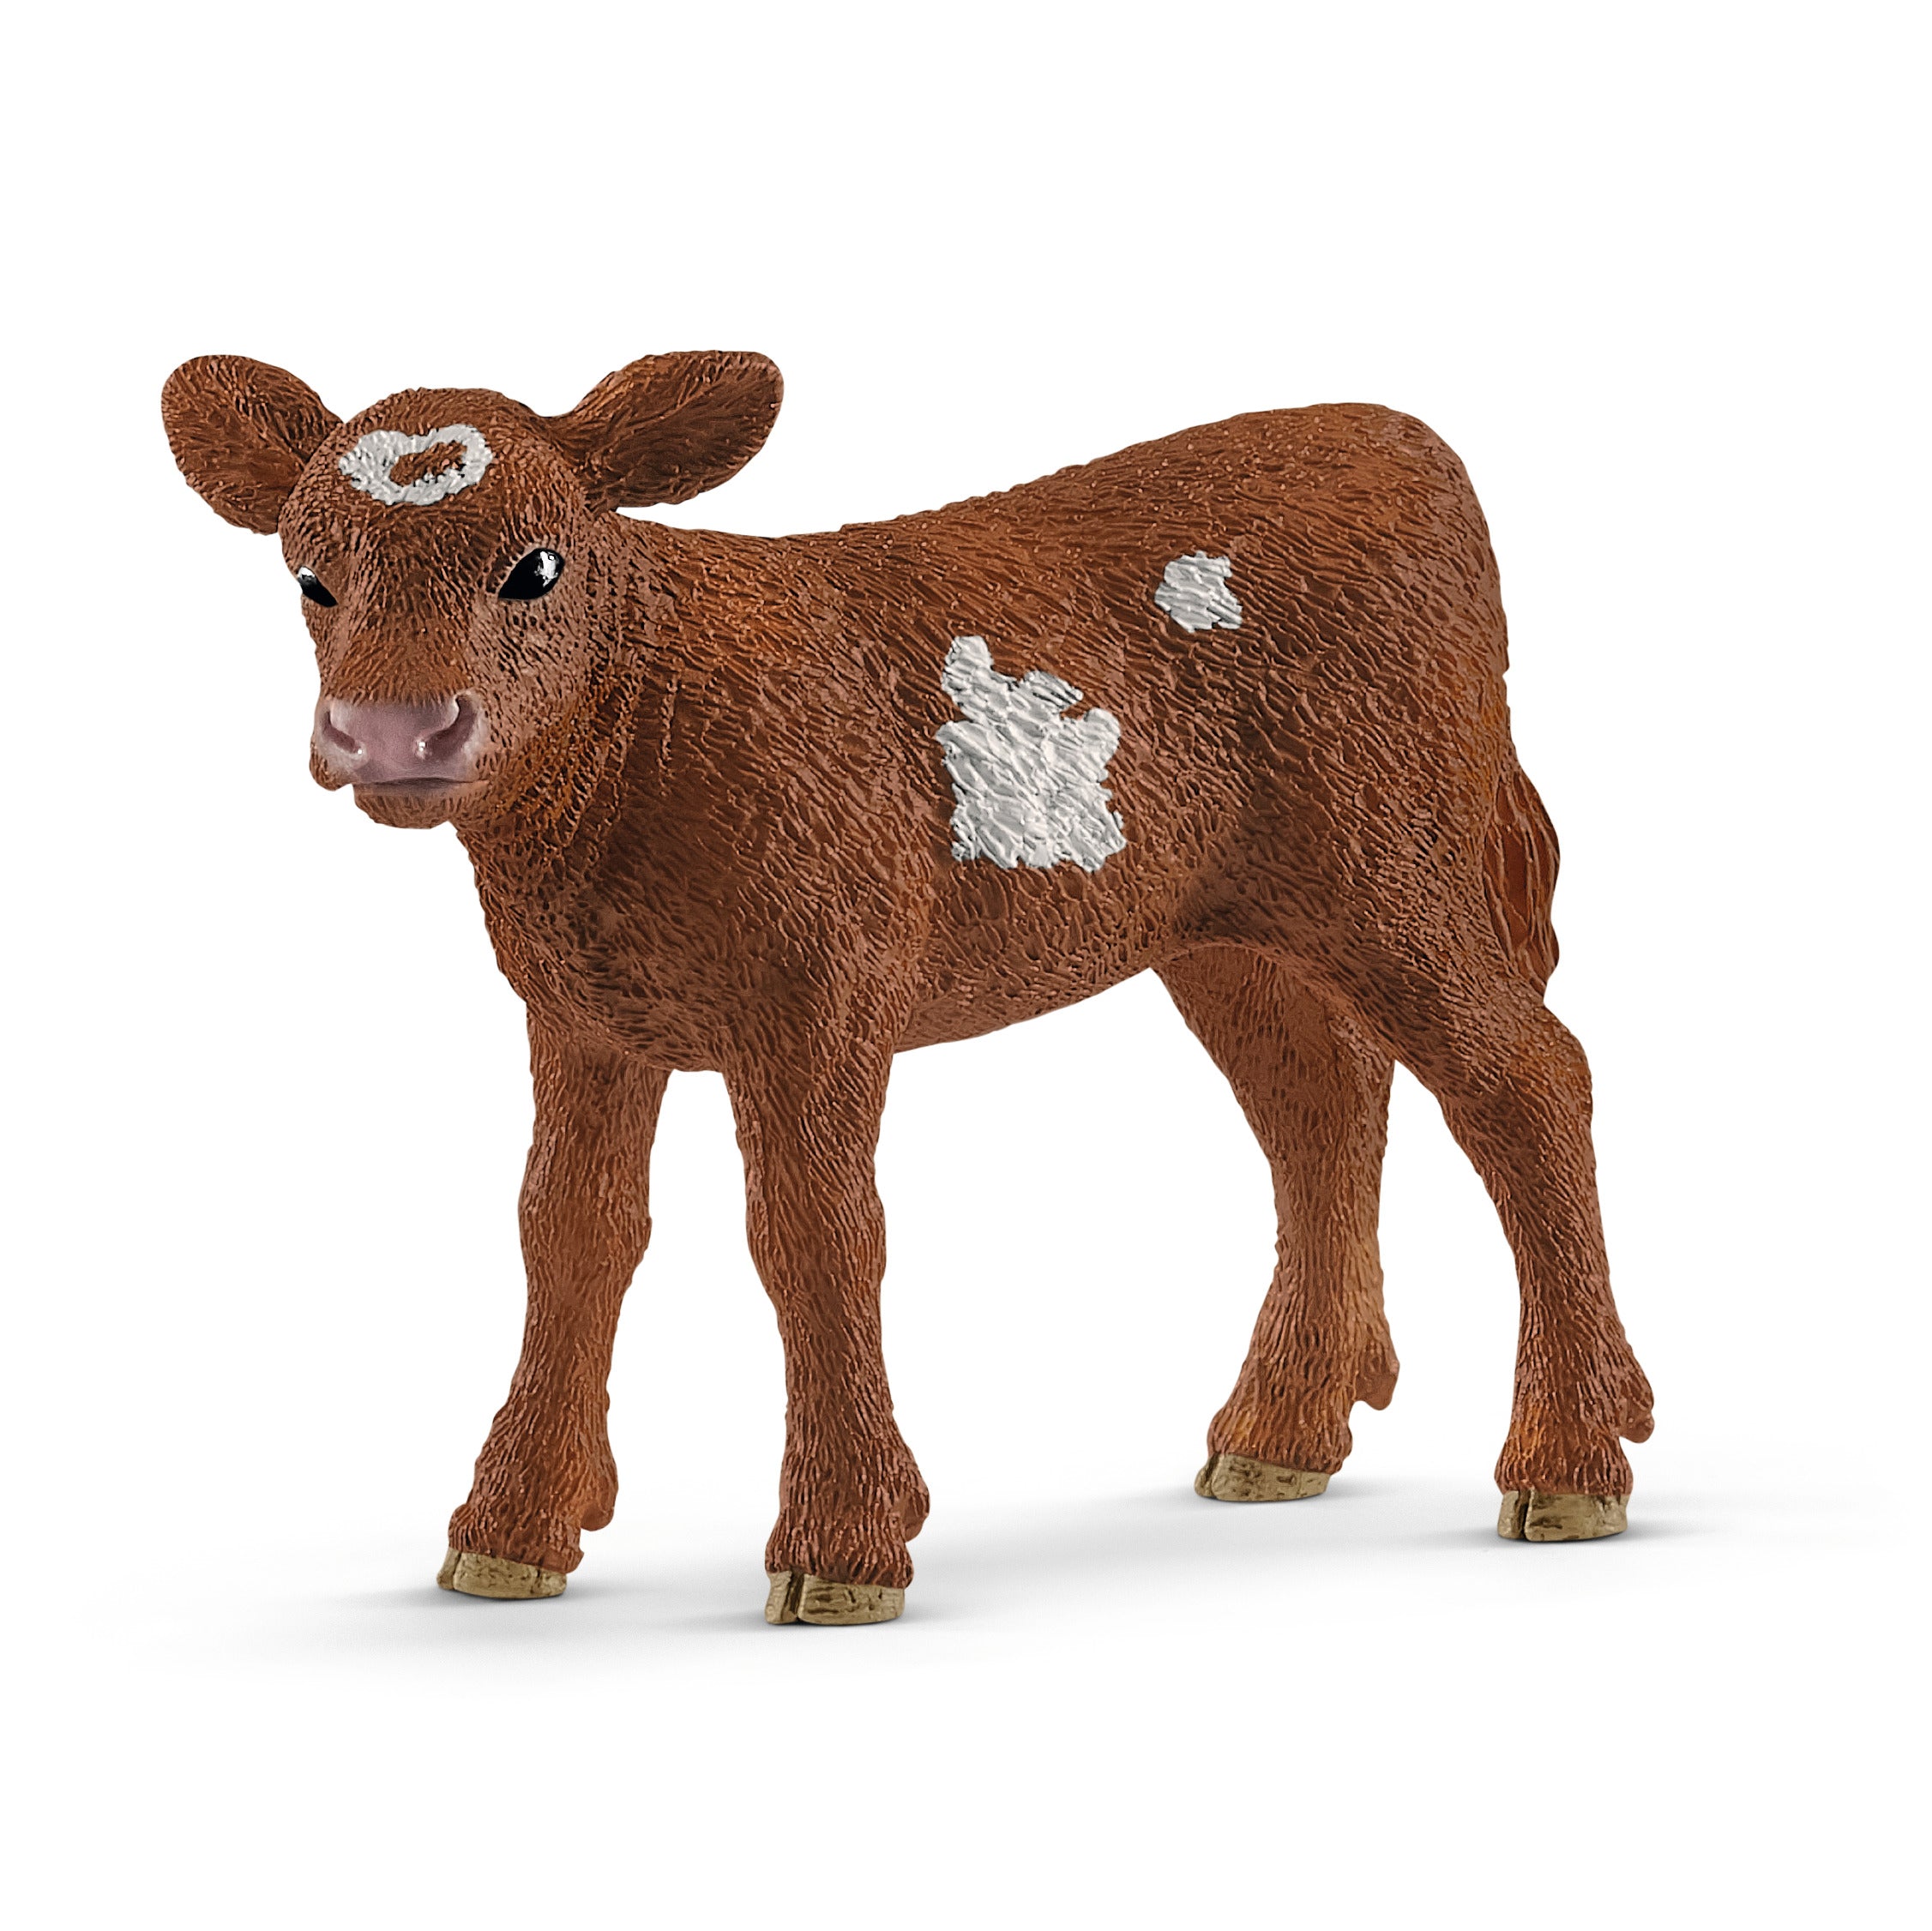 Texas Longhorn calf